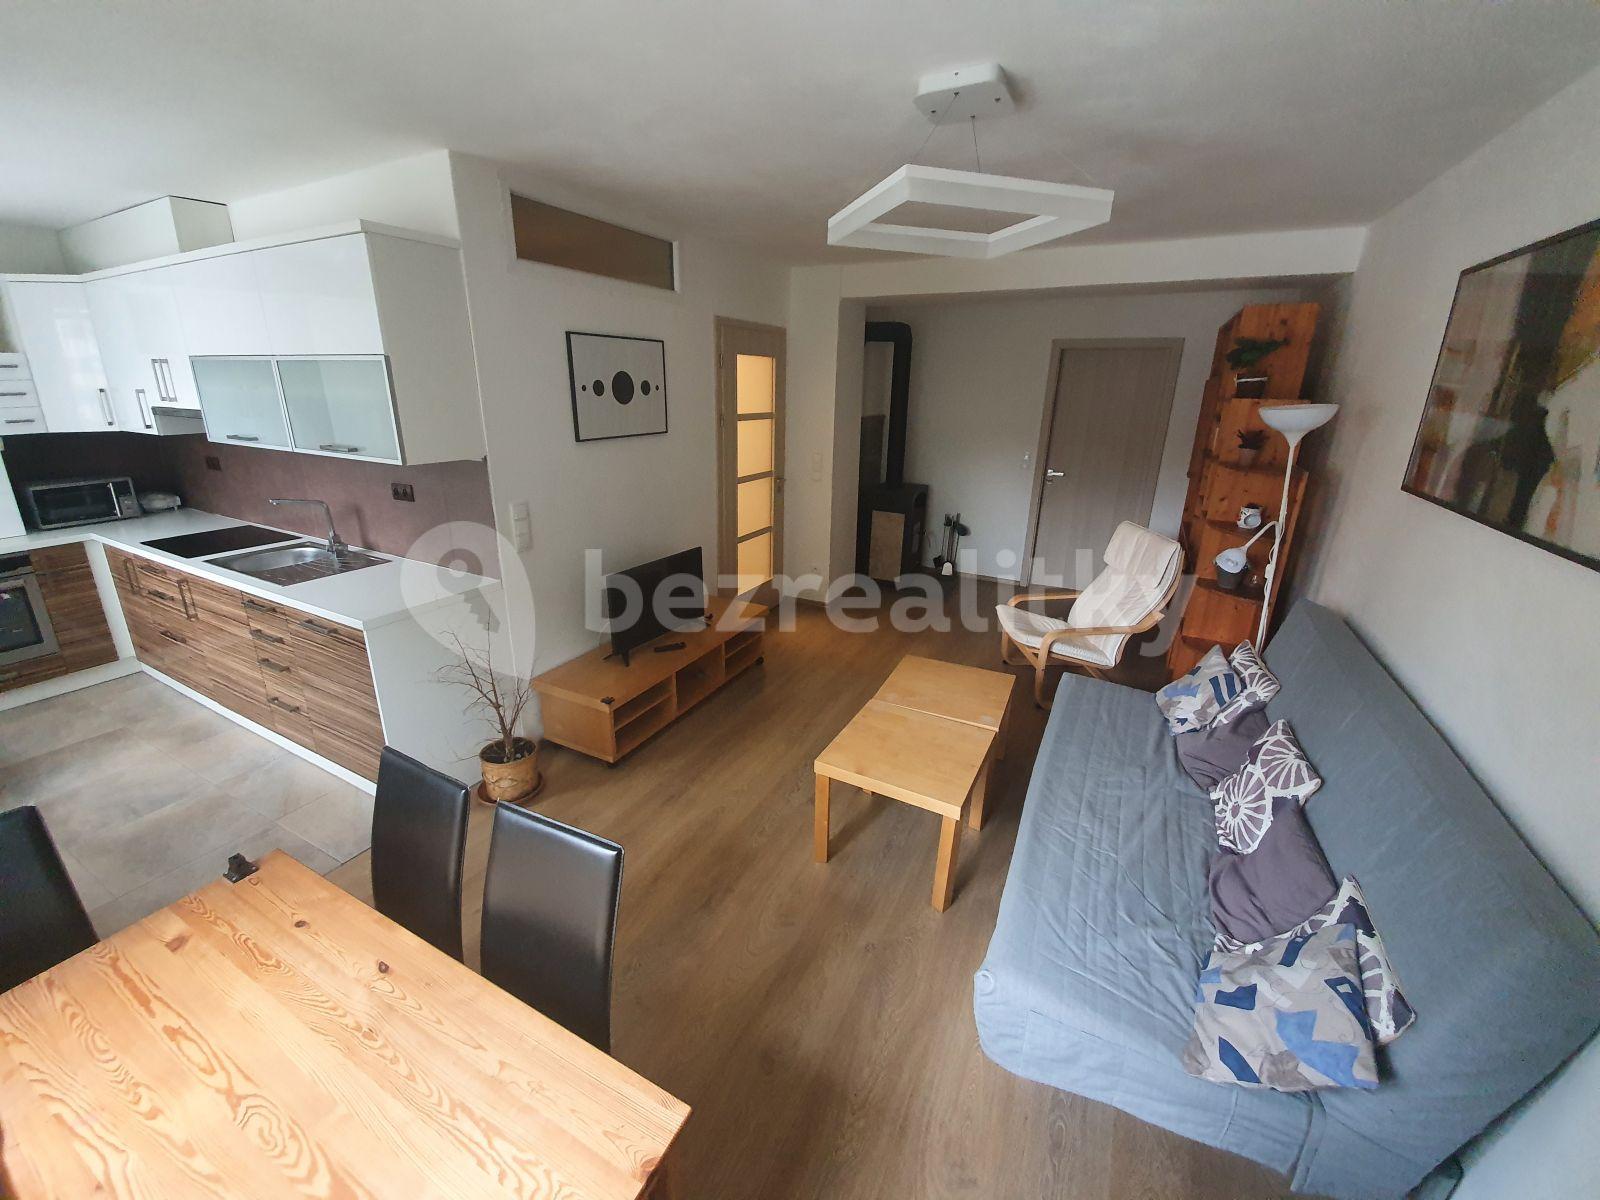 1 bedroom with open-plan kitchen flat to rent, 58 m², Pavlovova, Jihlava, Vysočina Region